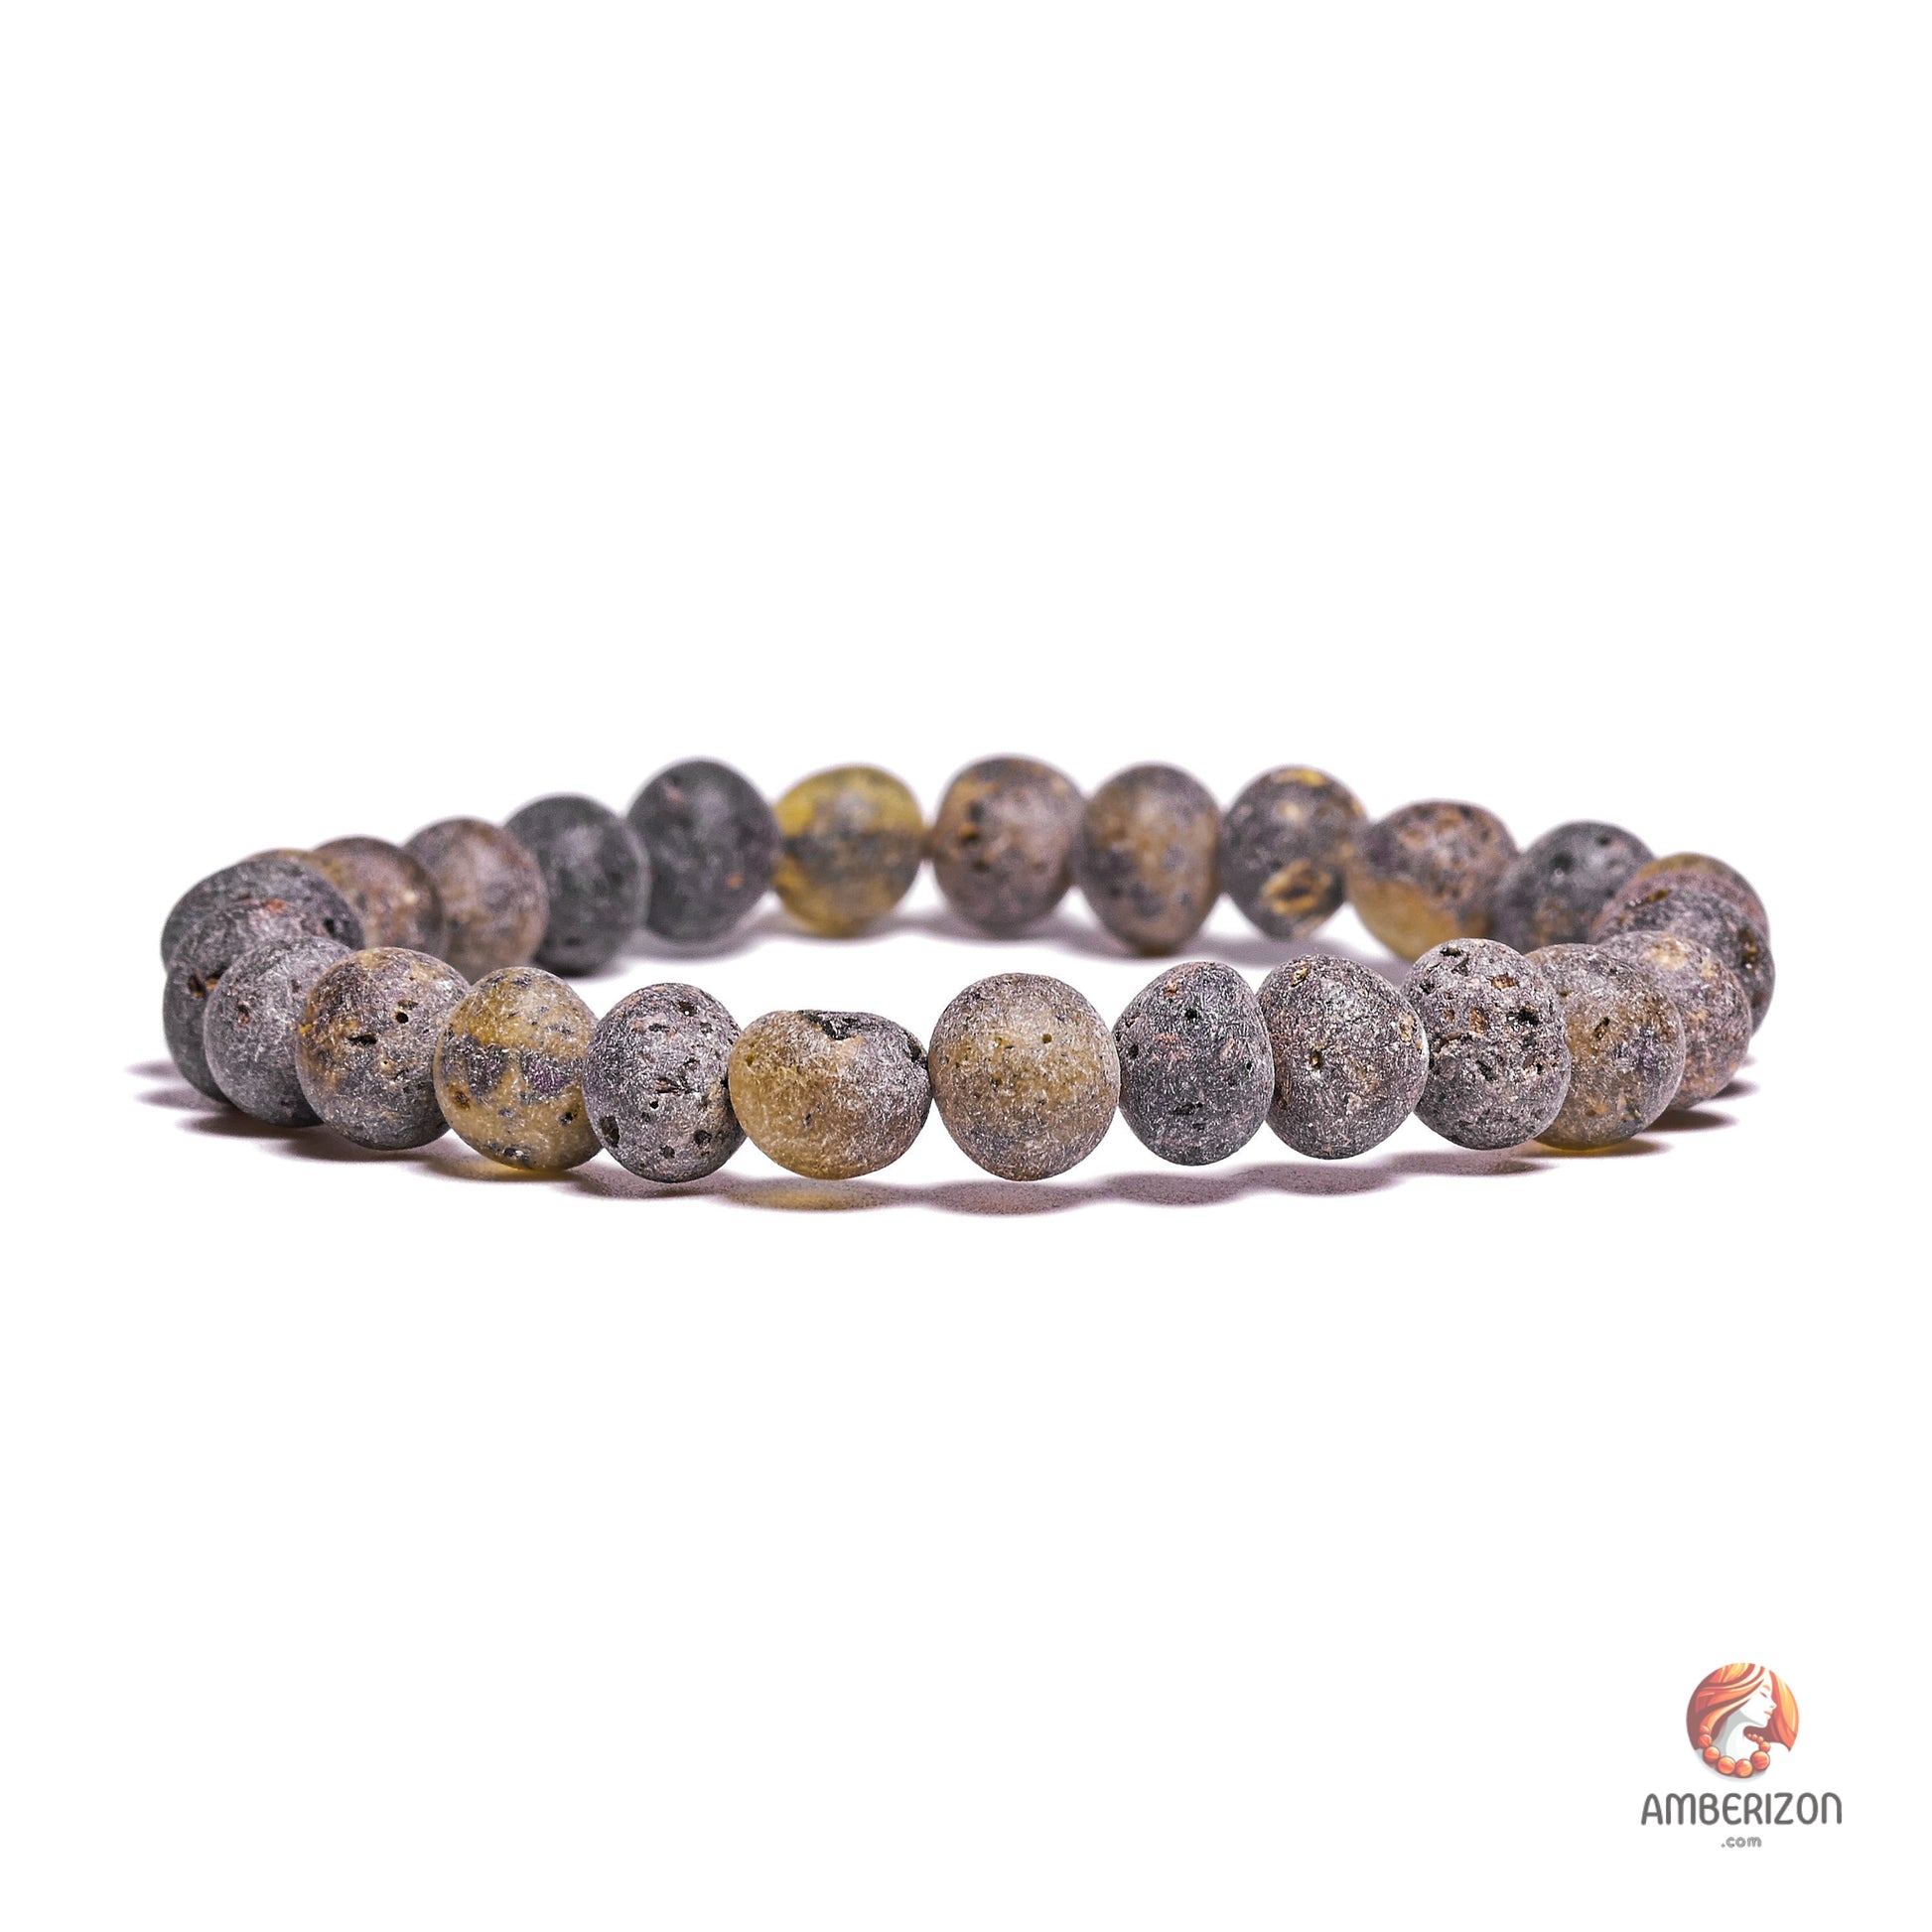 Unpolished raw amber bracelet - Premium frosted dark grey finish baroque beads